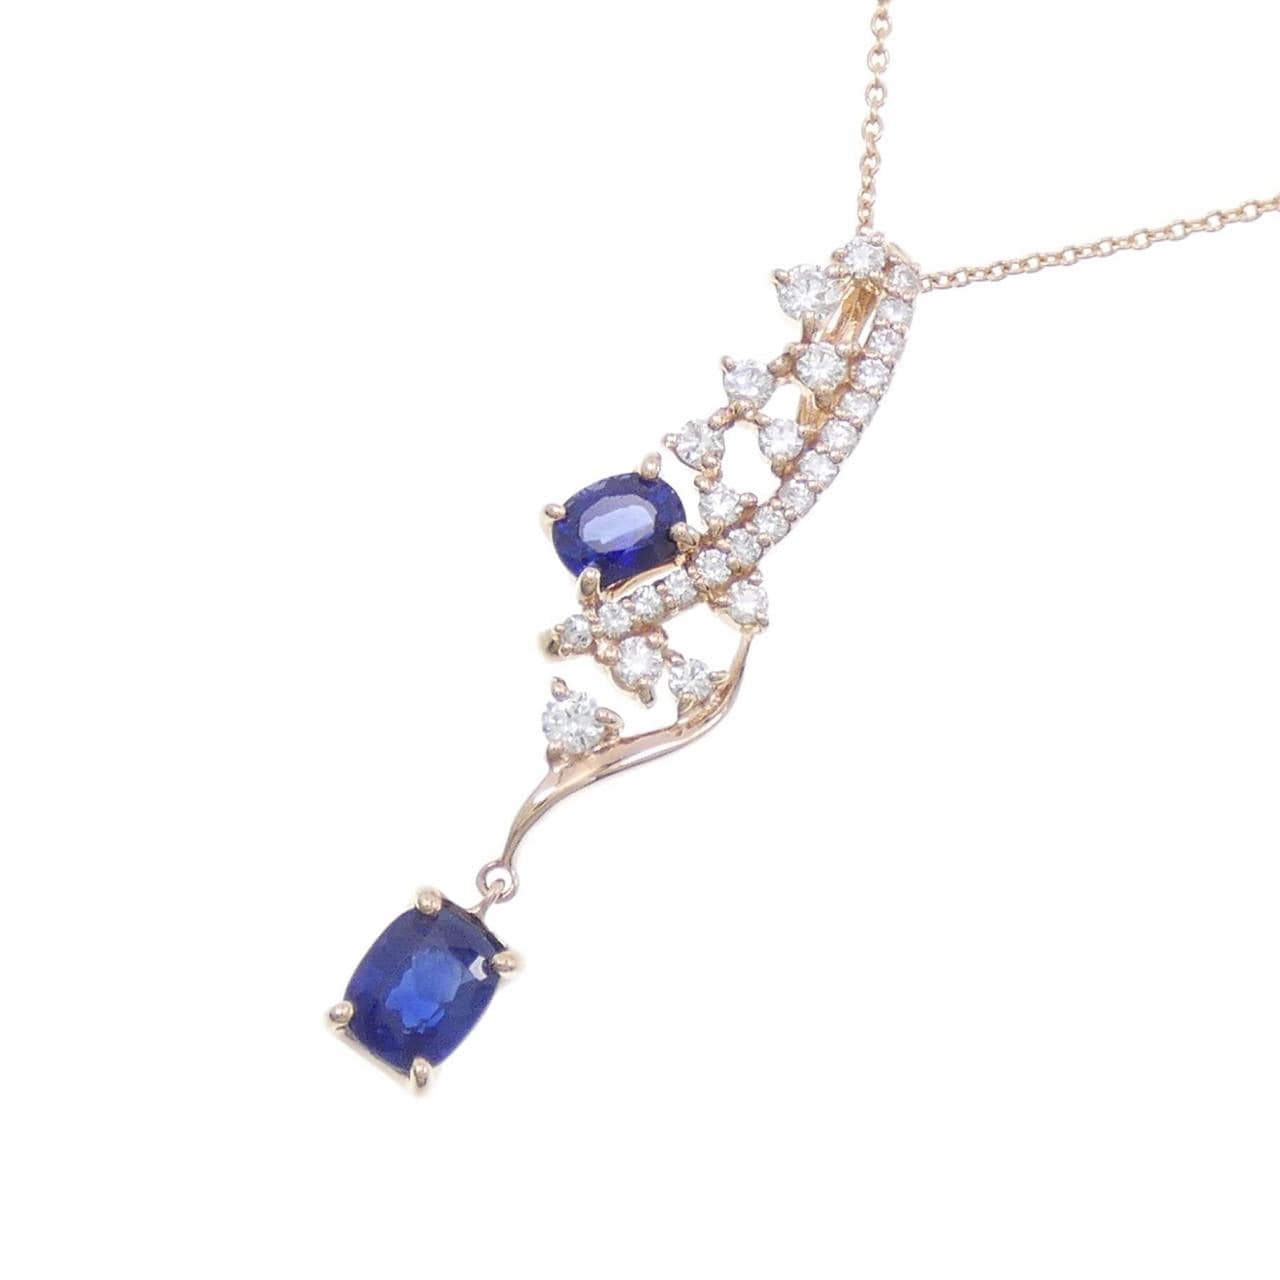 K18PG sapphire necklace 1.03CT